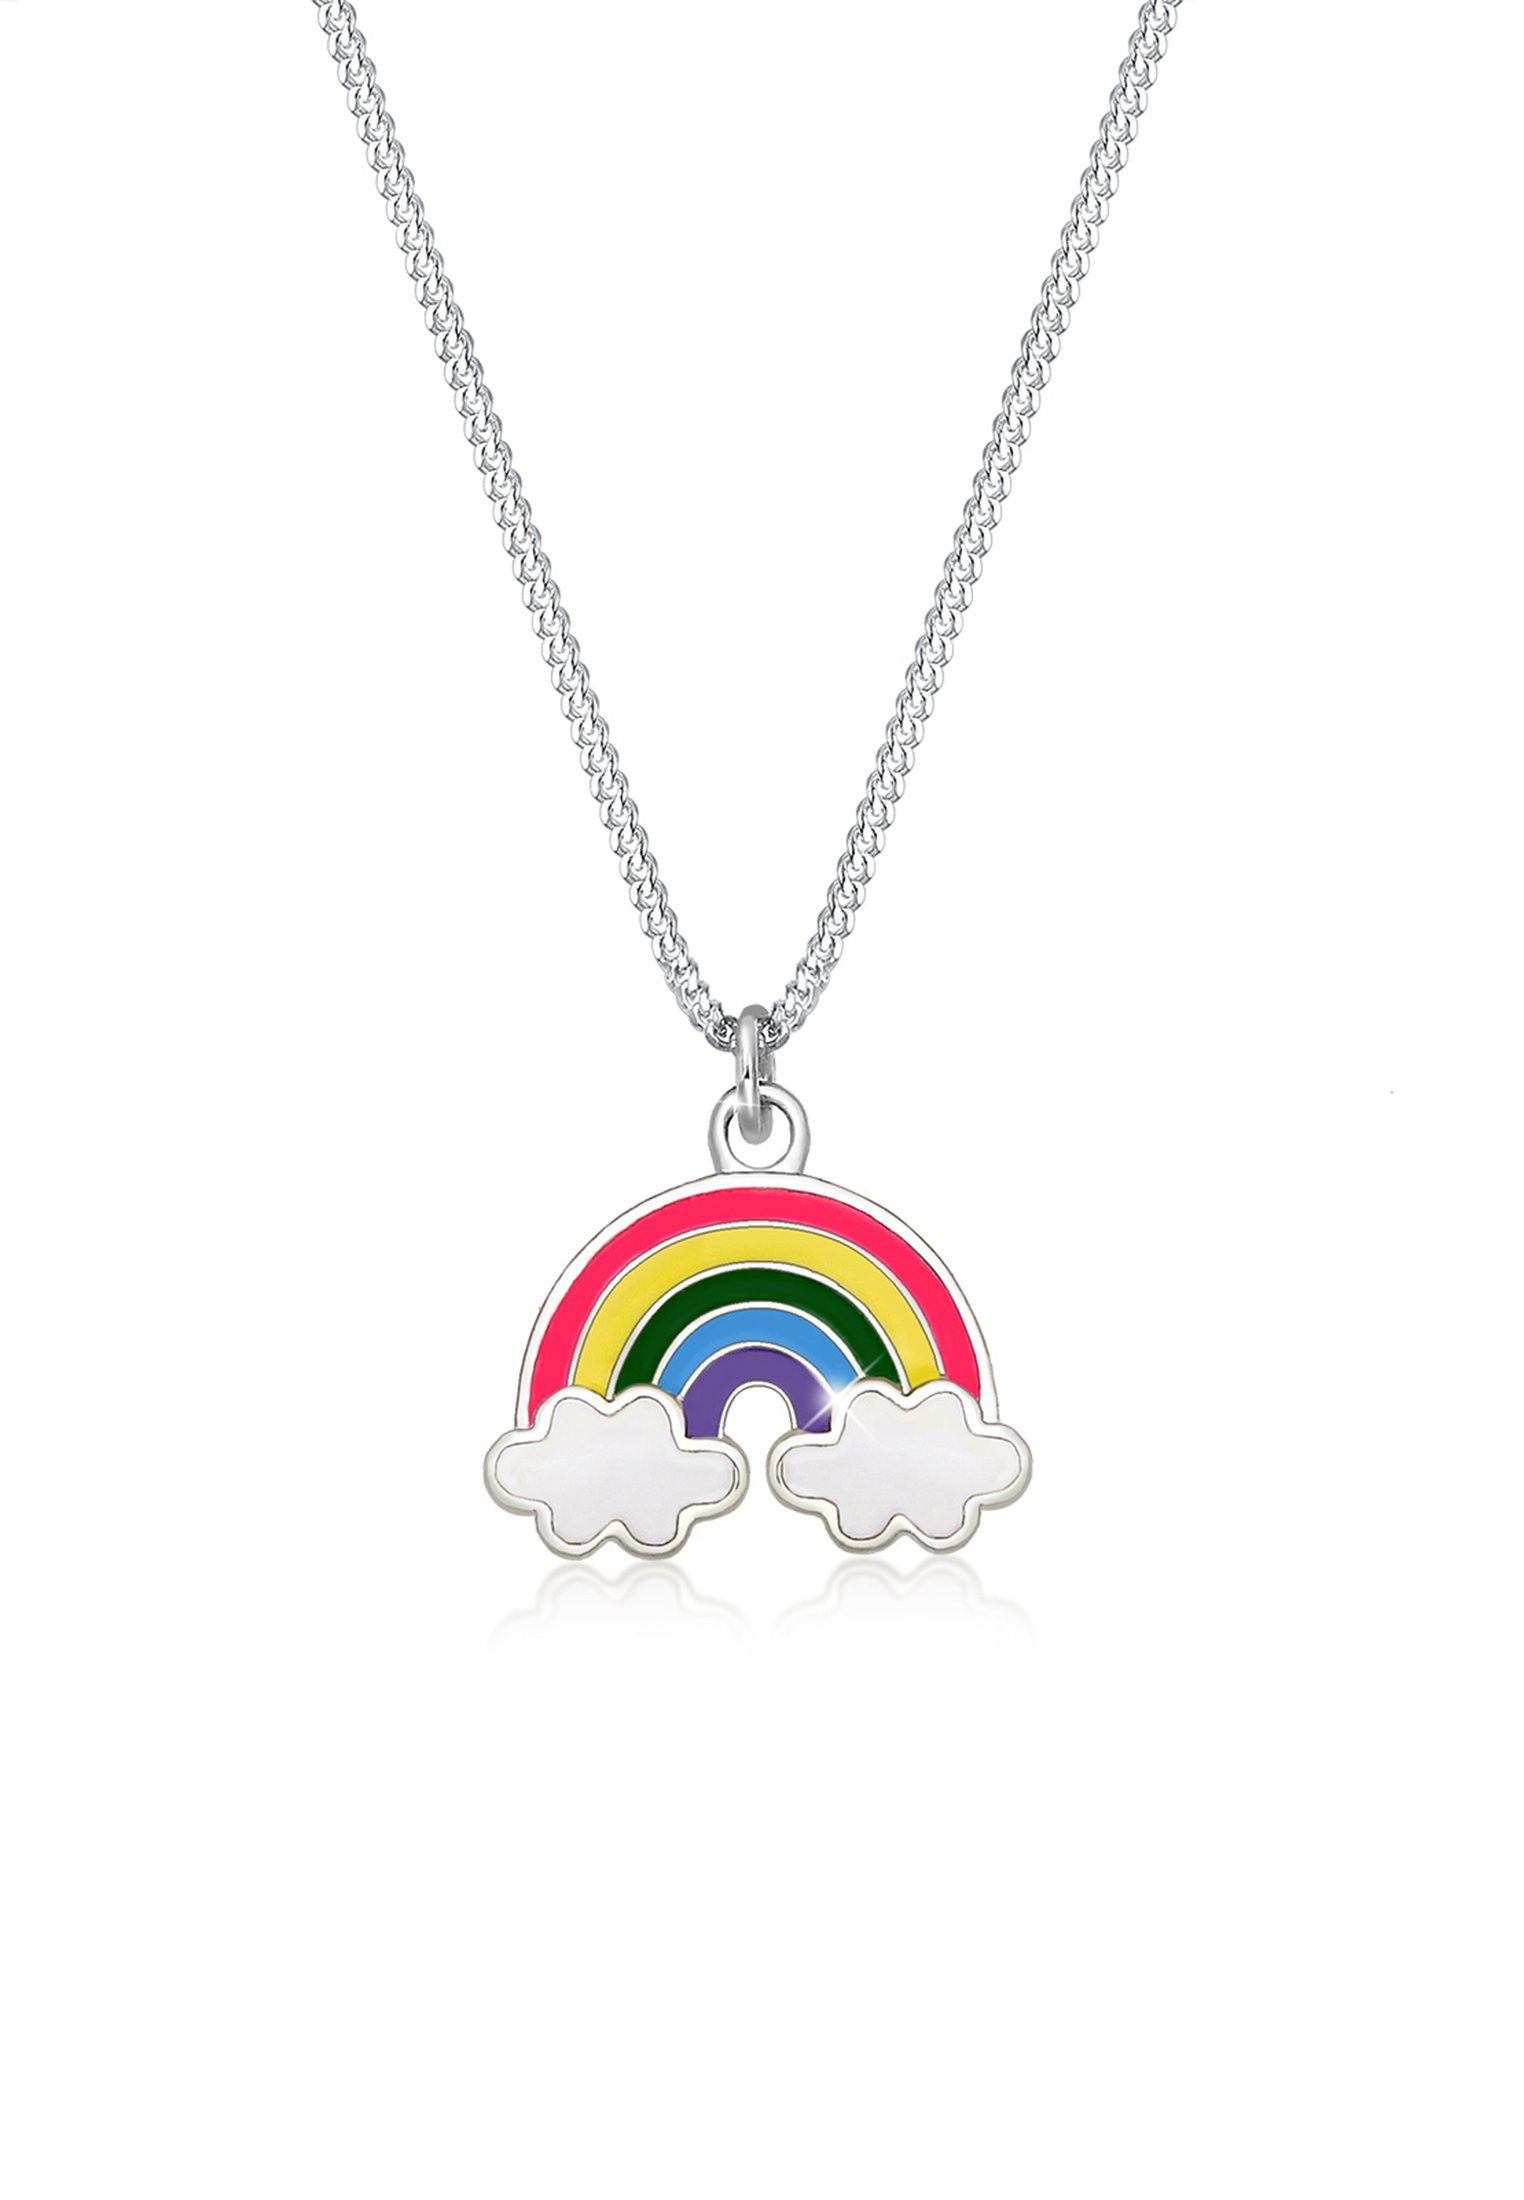 Elli Kette mit Anhänger Kinder Regenbogen Wolke Emaille Happy 925 Silber, Regenbogen | Ketten mit Anhänger